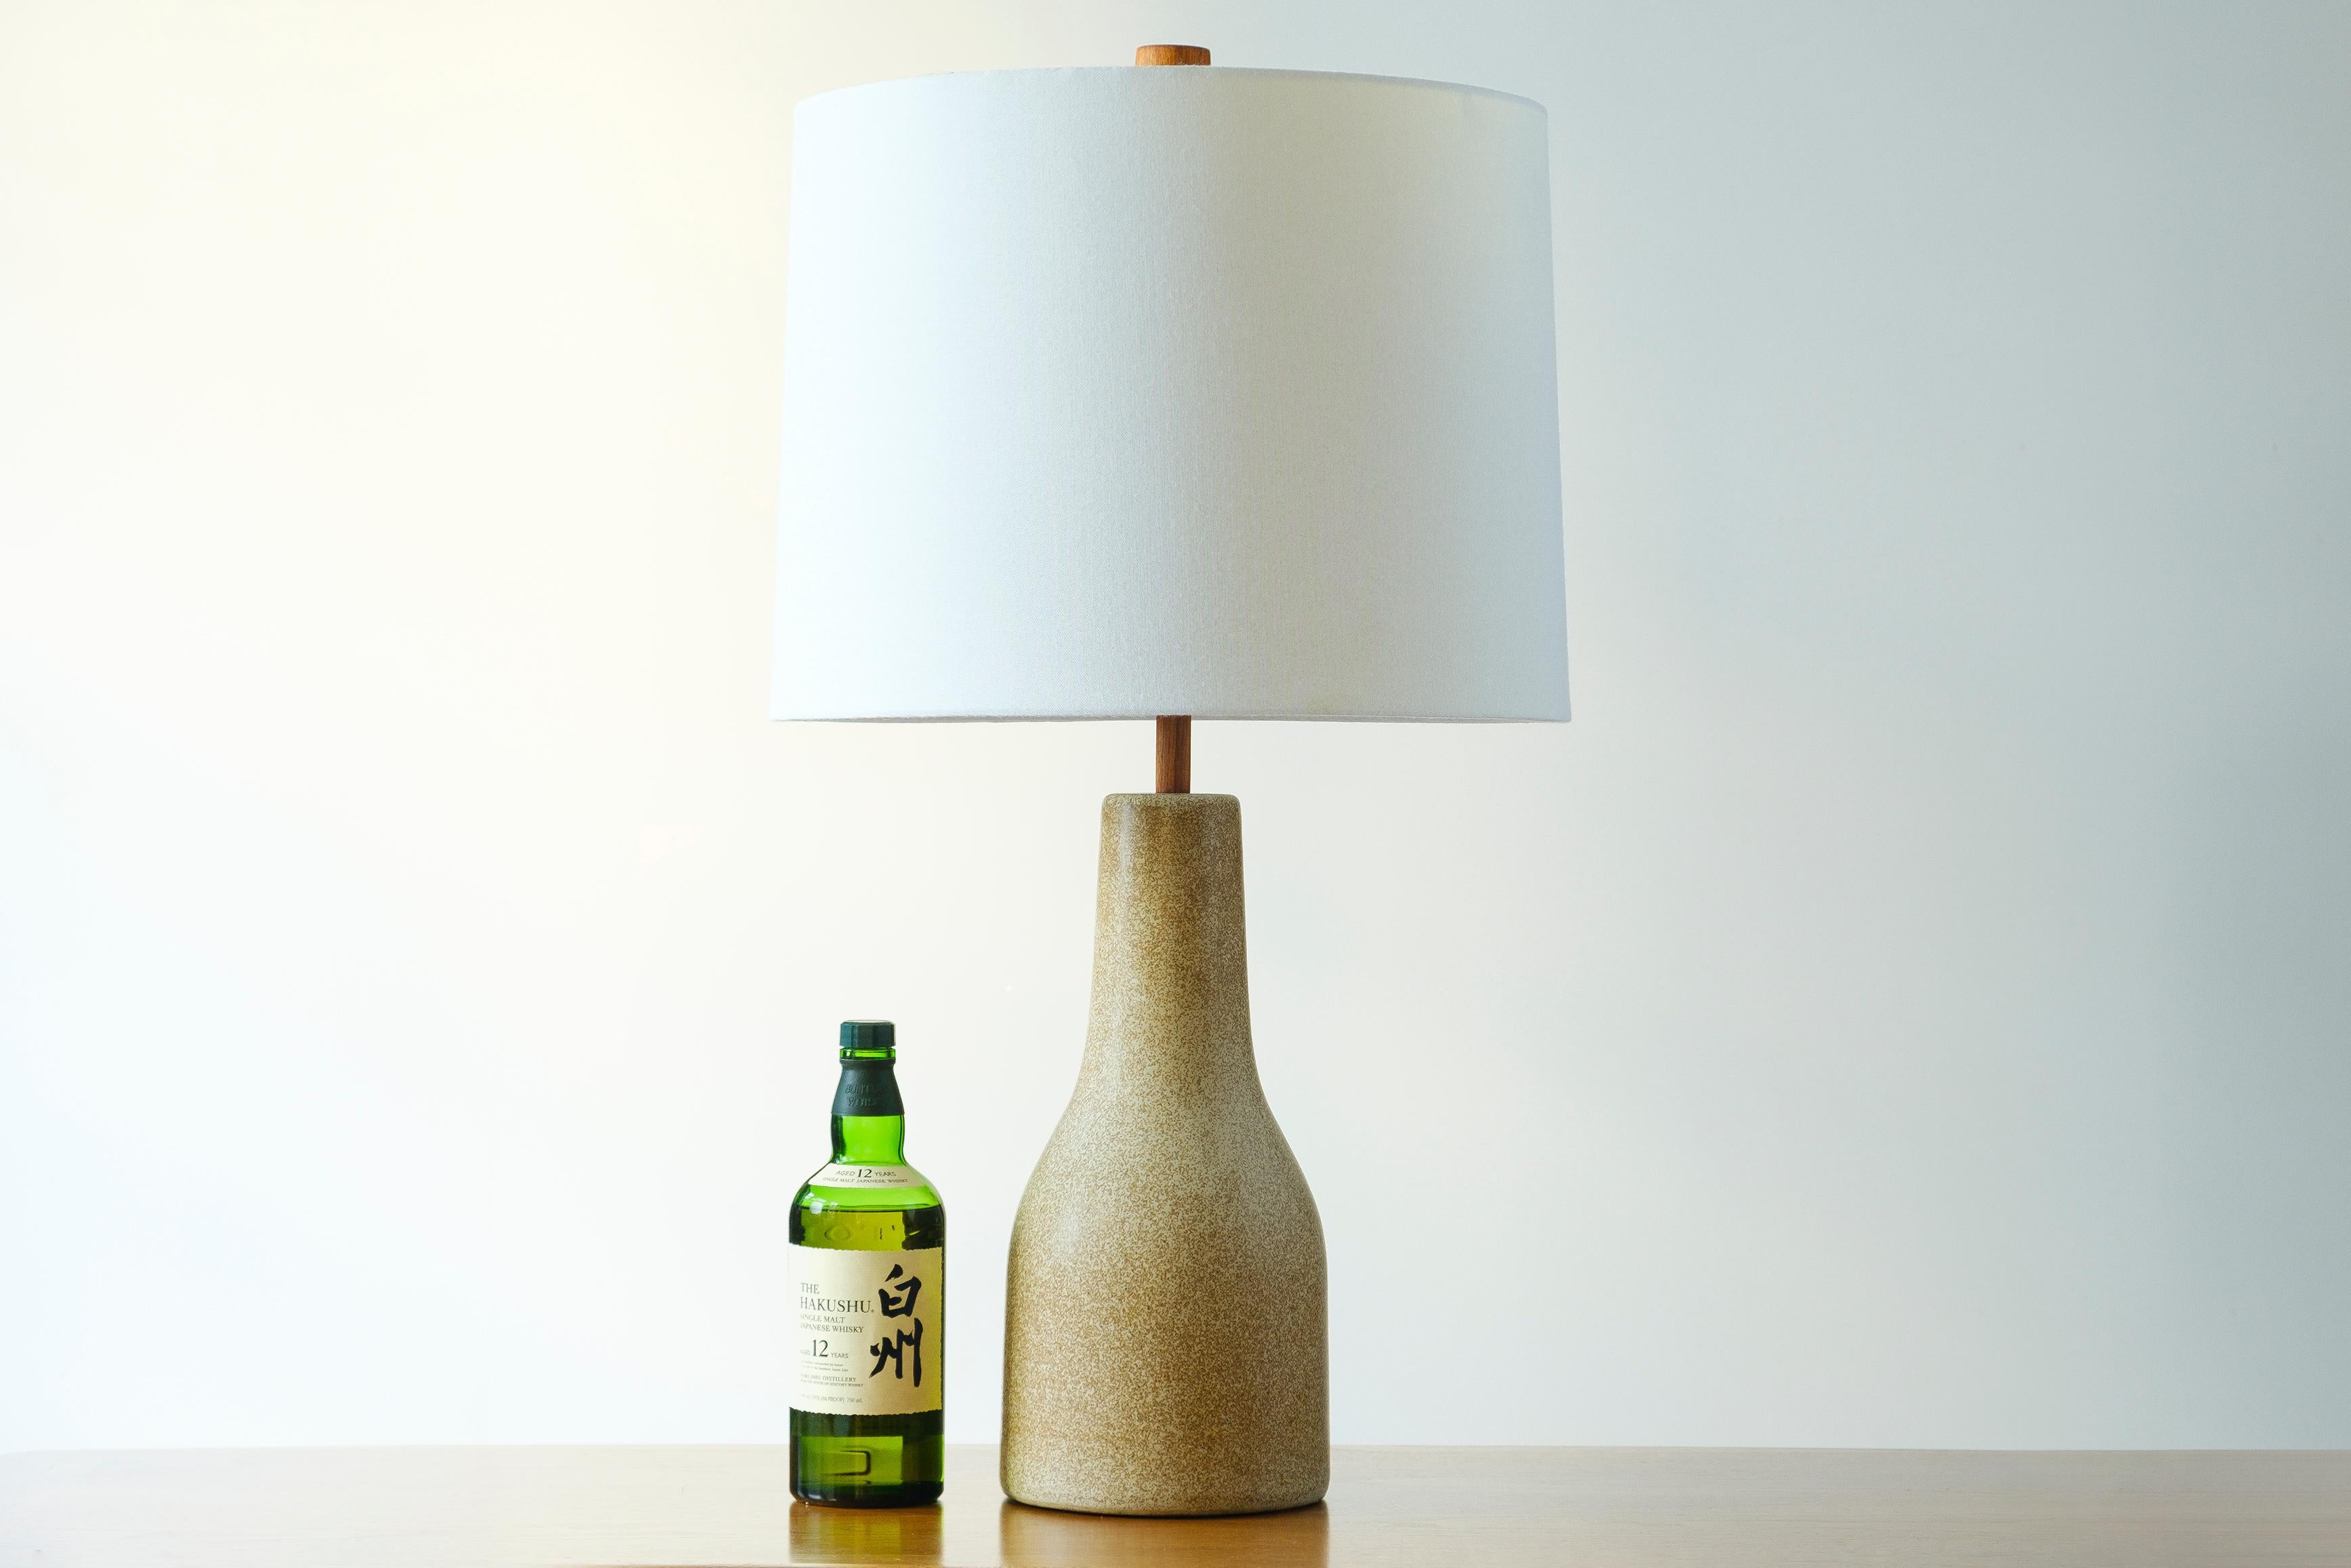 American Martz / Marshall Studios Ceramic Table Lamp, Tan with tiny Neck